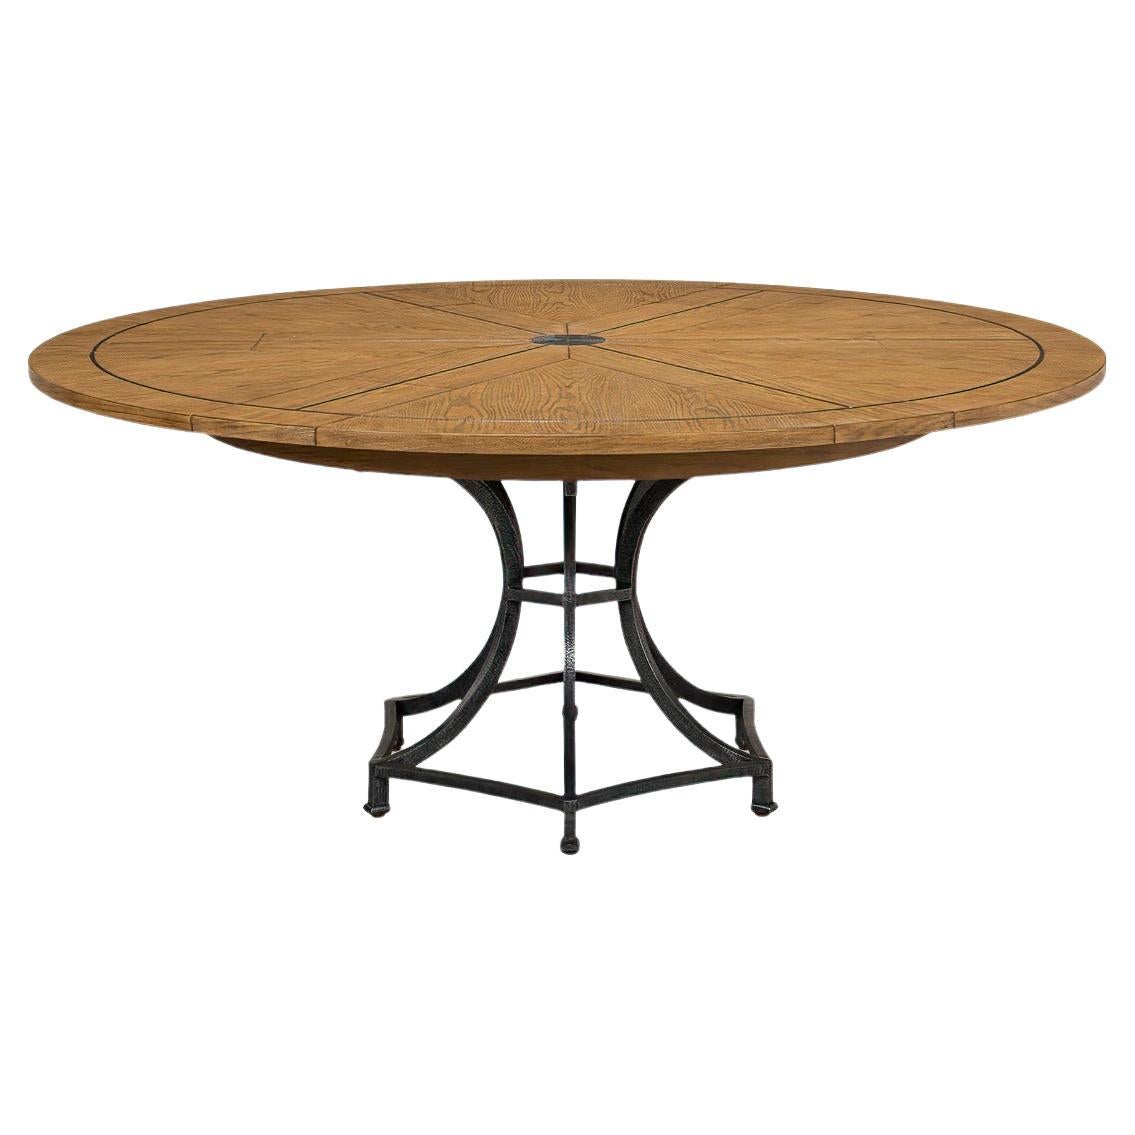 Modern Industrial Round Dining Table - Warm Oak